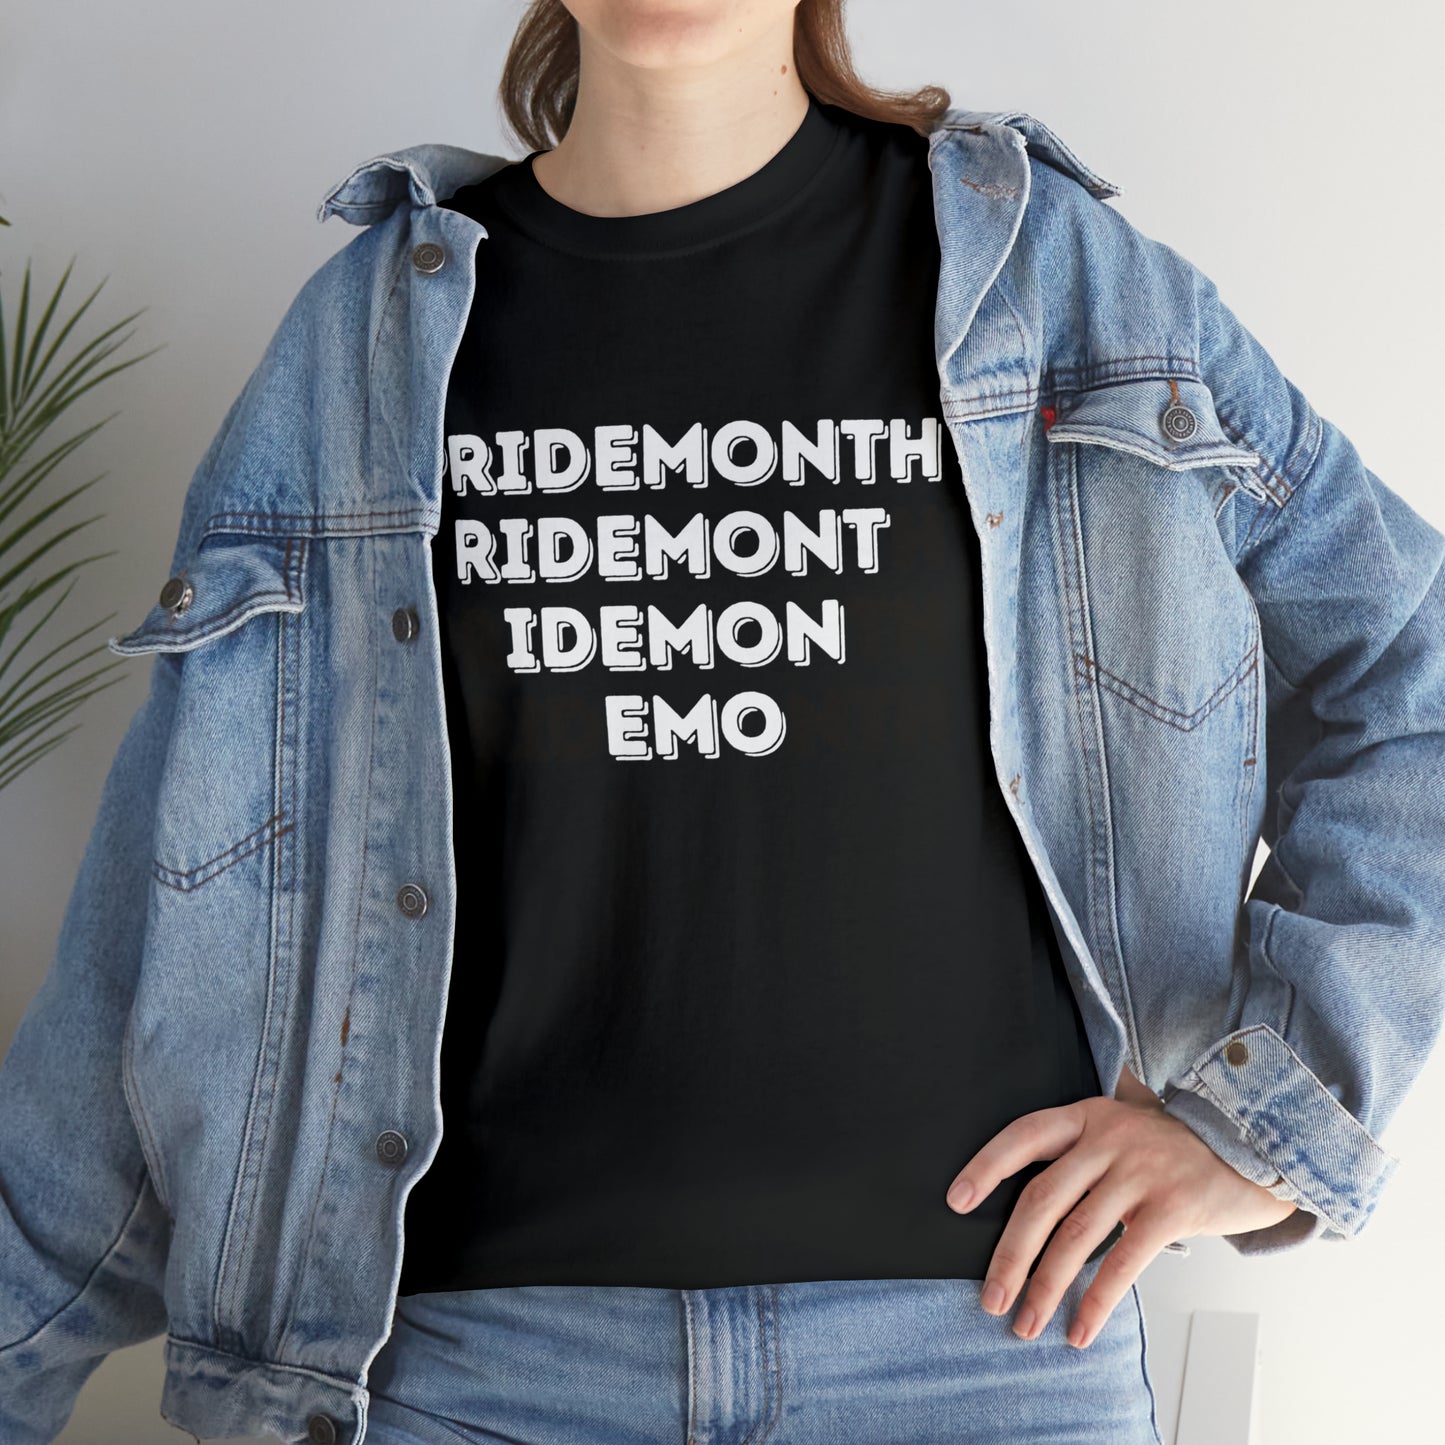 Emo Pride Month shirt